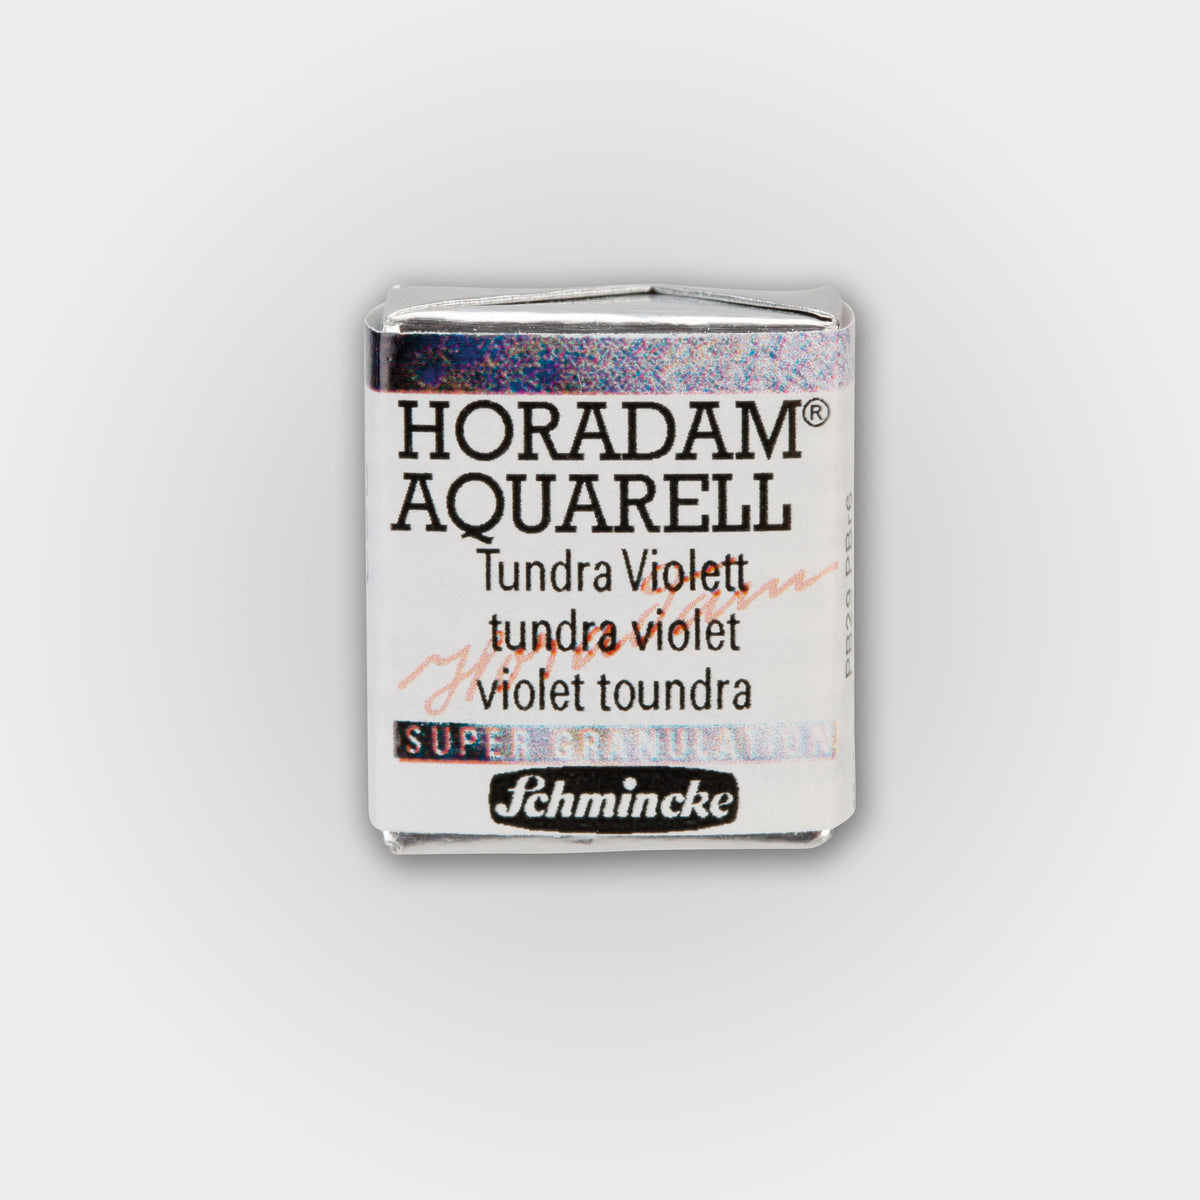 Schmincke Horadam® Super granulating Half pan 983 Tundra violet 3